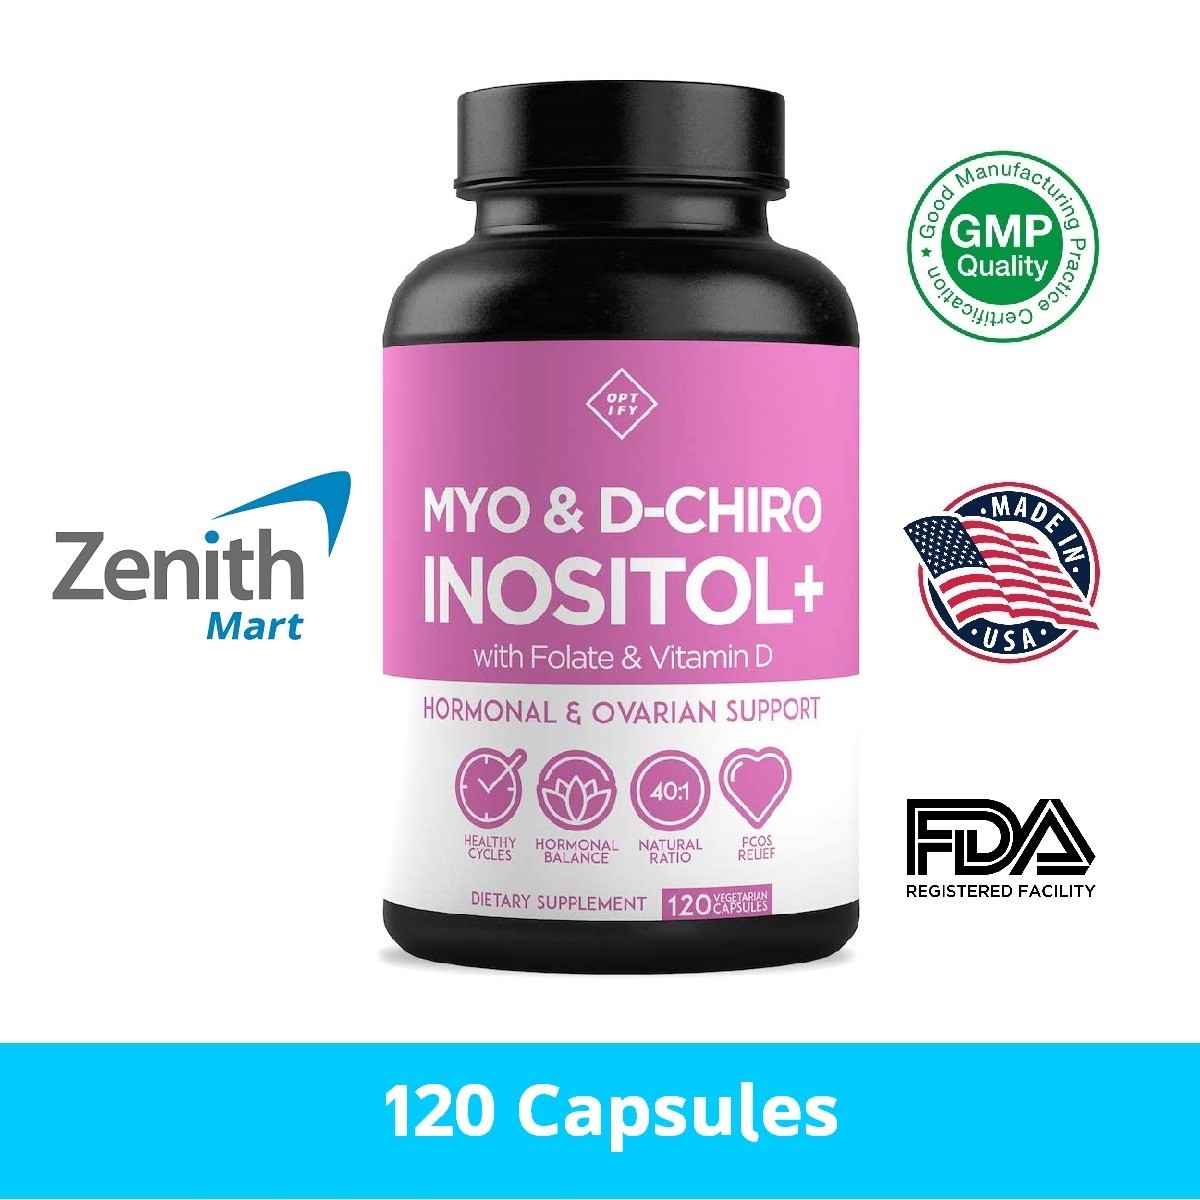 Myo-Inositol PCOS Supplement - 120 (Myo) Inositol Tablets Enriched